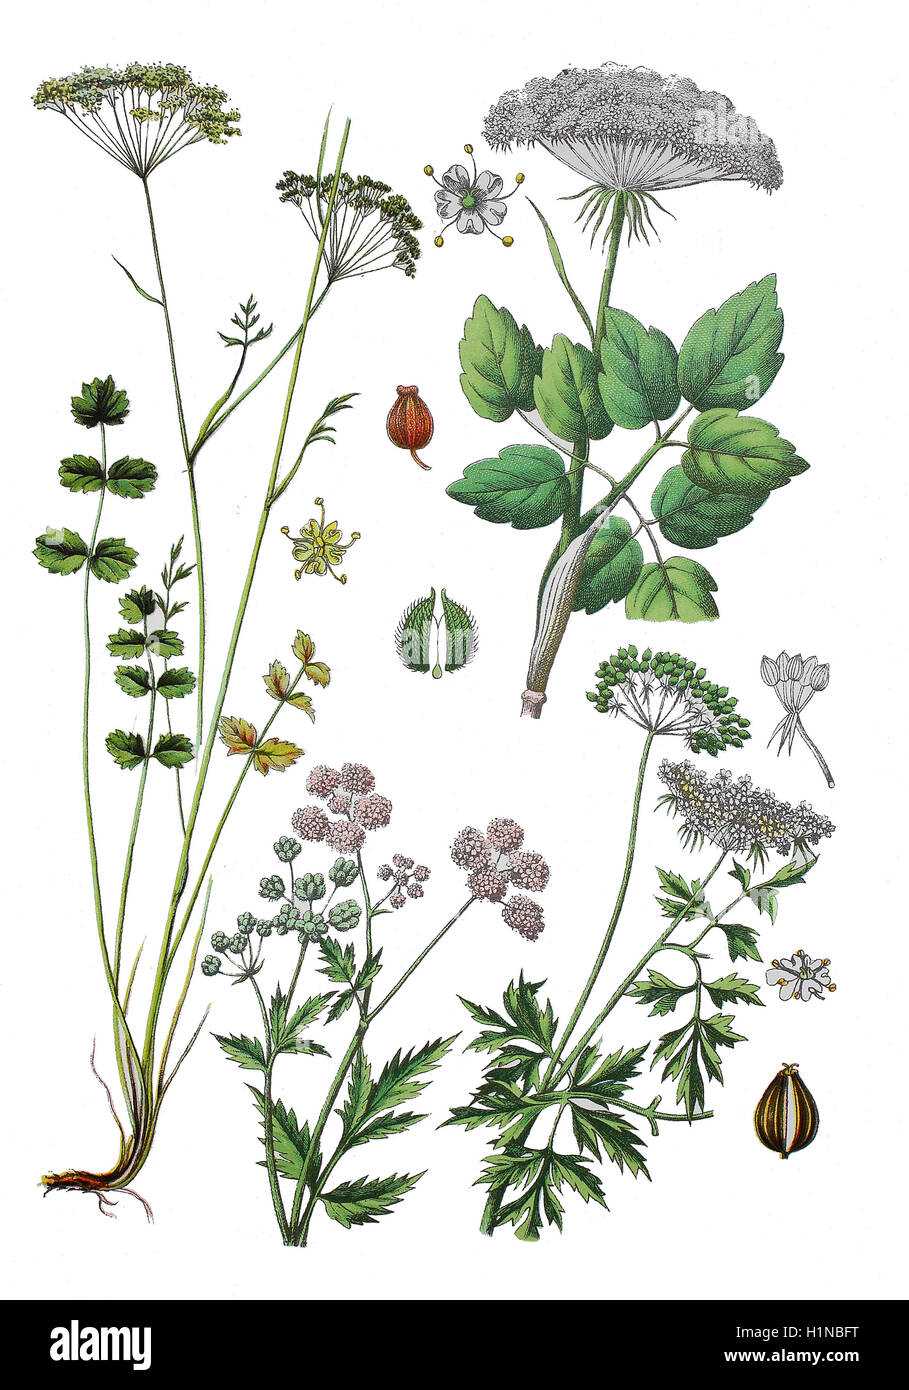 burnet-saxifrage, Pimpinella saxifraga (left), hedge parsley, Torilis (bottem center), broad-leaved sermountain, Laserpitium latifolium (top right), fool's parsley, fool's cicely, Aethusa cynapium (bottem right) Stock Photo